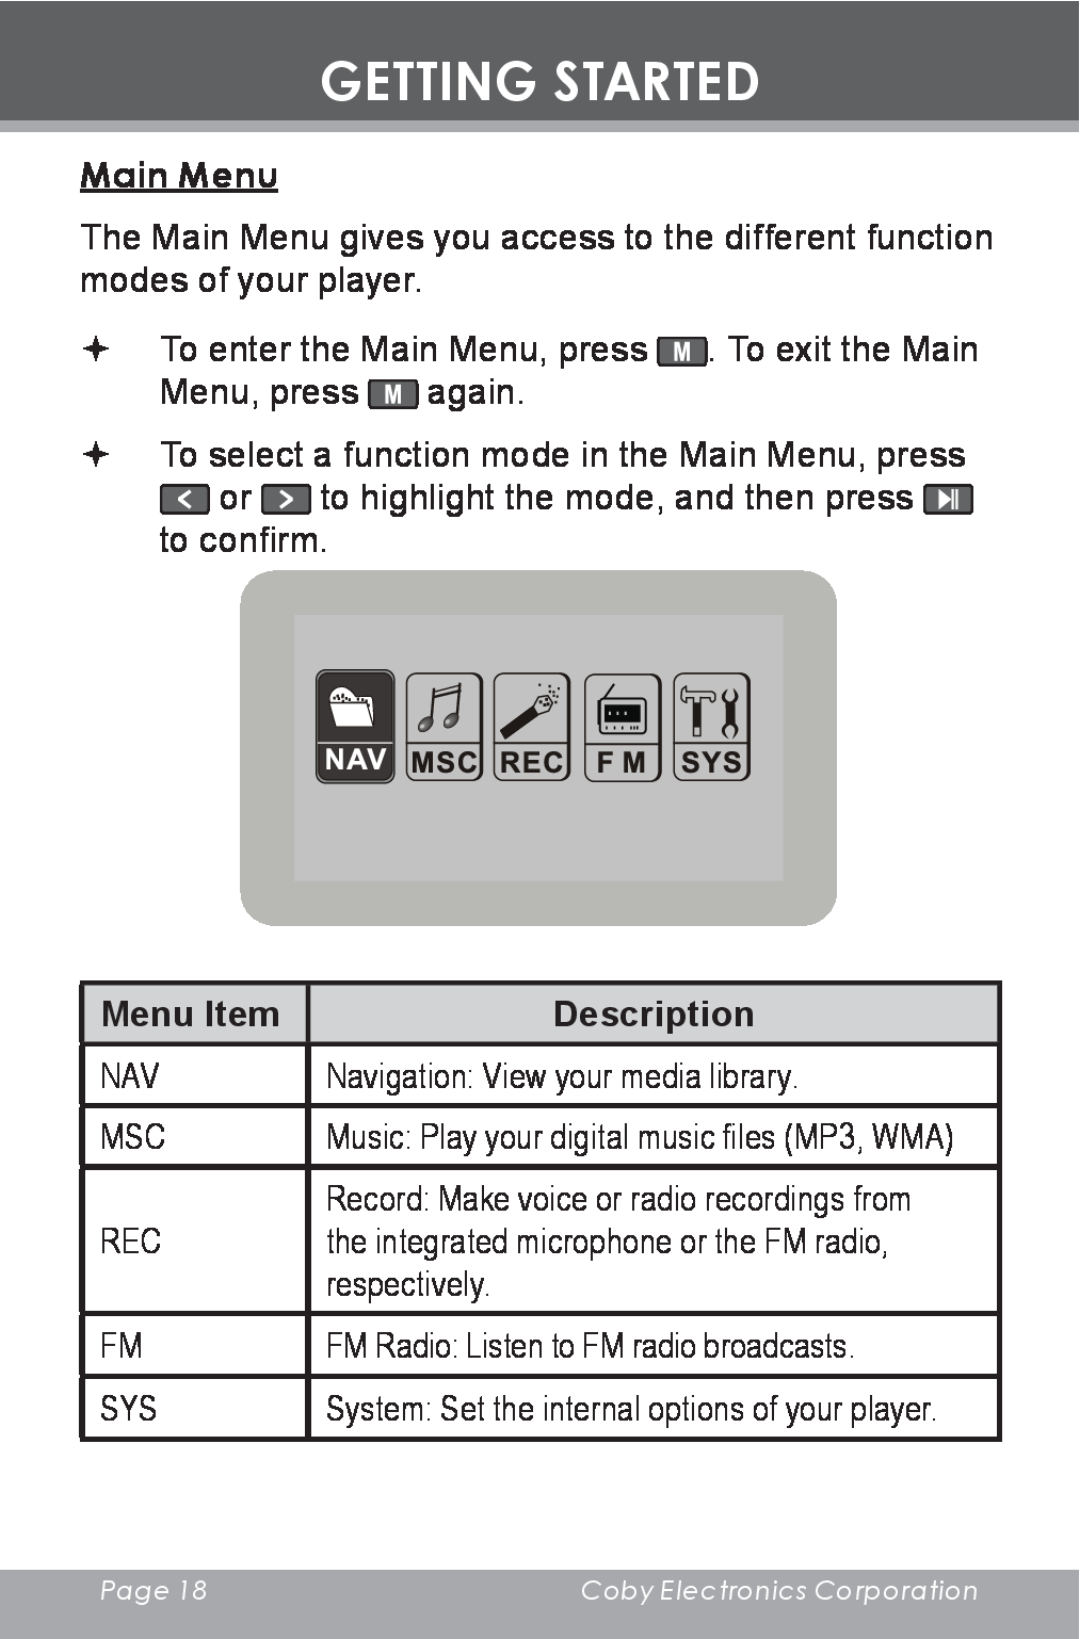 COBY electronic MP-C643 instruction manual Main Menu, Menu Item, Description, Getting Started 